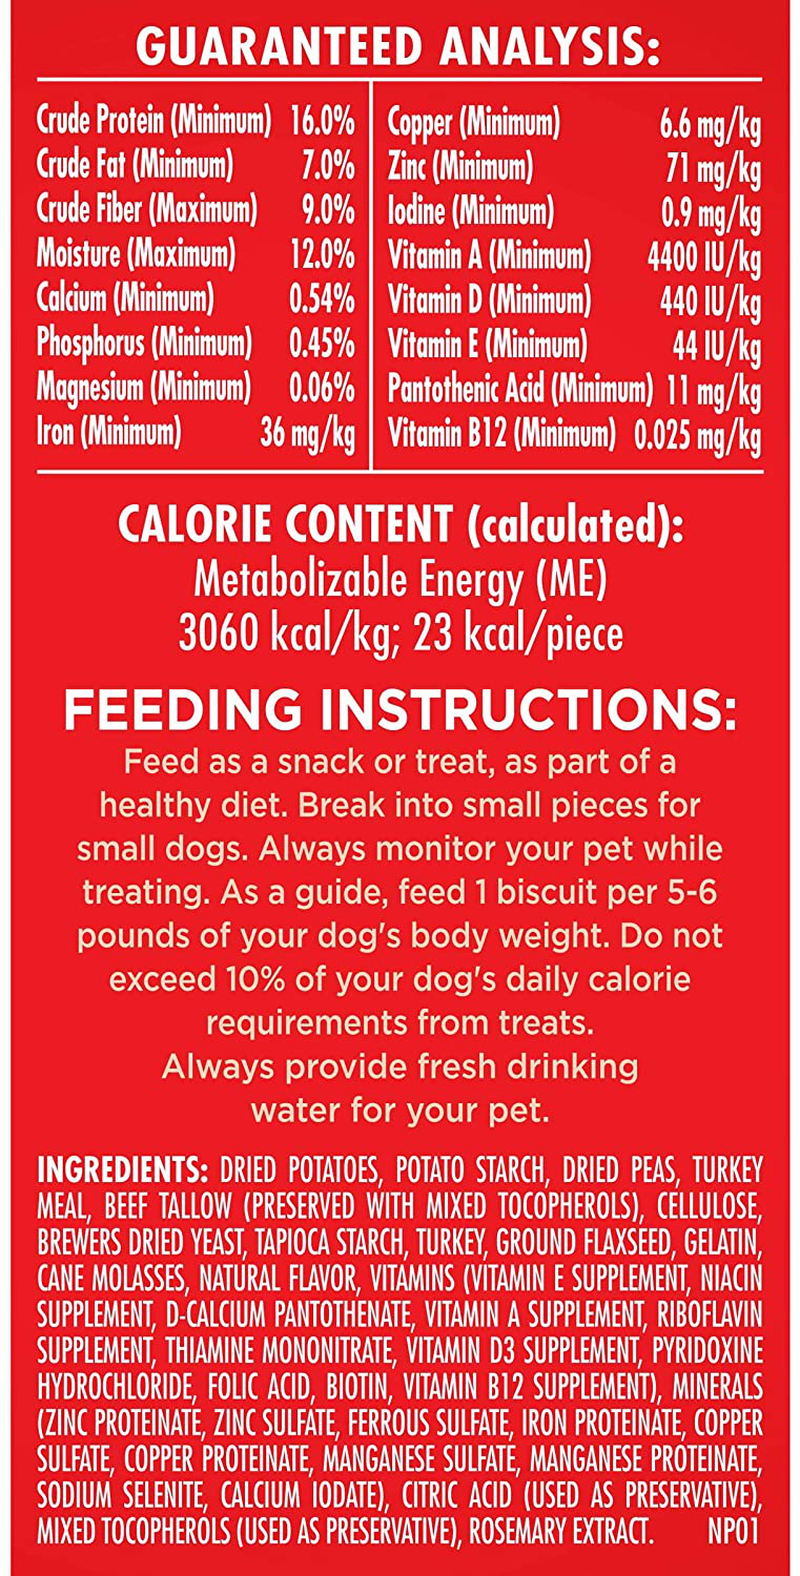 Milk-Bone Grain Free Dog Biscuits, Small Size Animals & Pet Supplies > Pet Supplies > Dog Supplies > Dog Treats Milk-Bone   